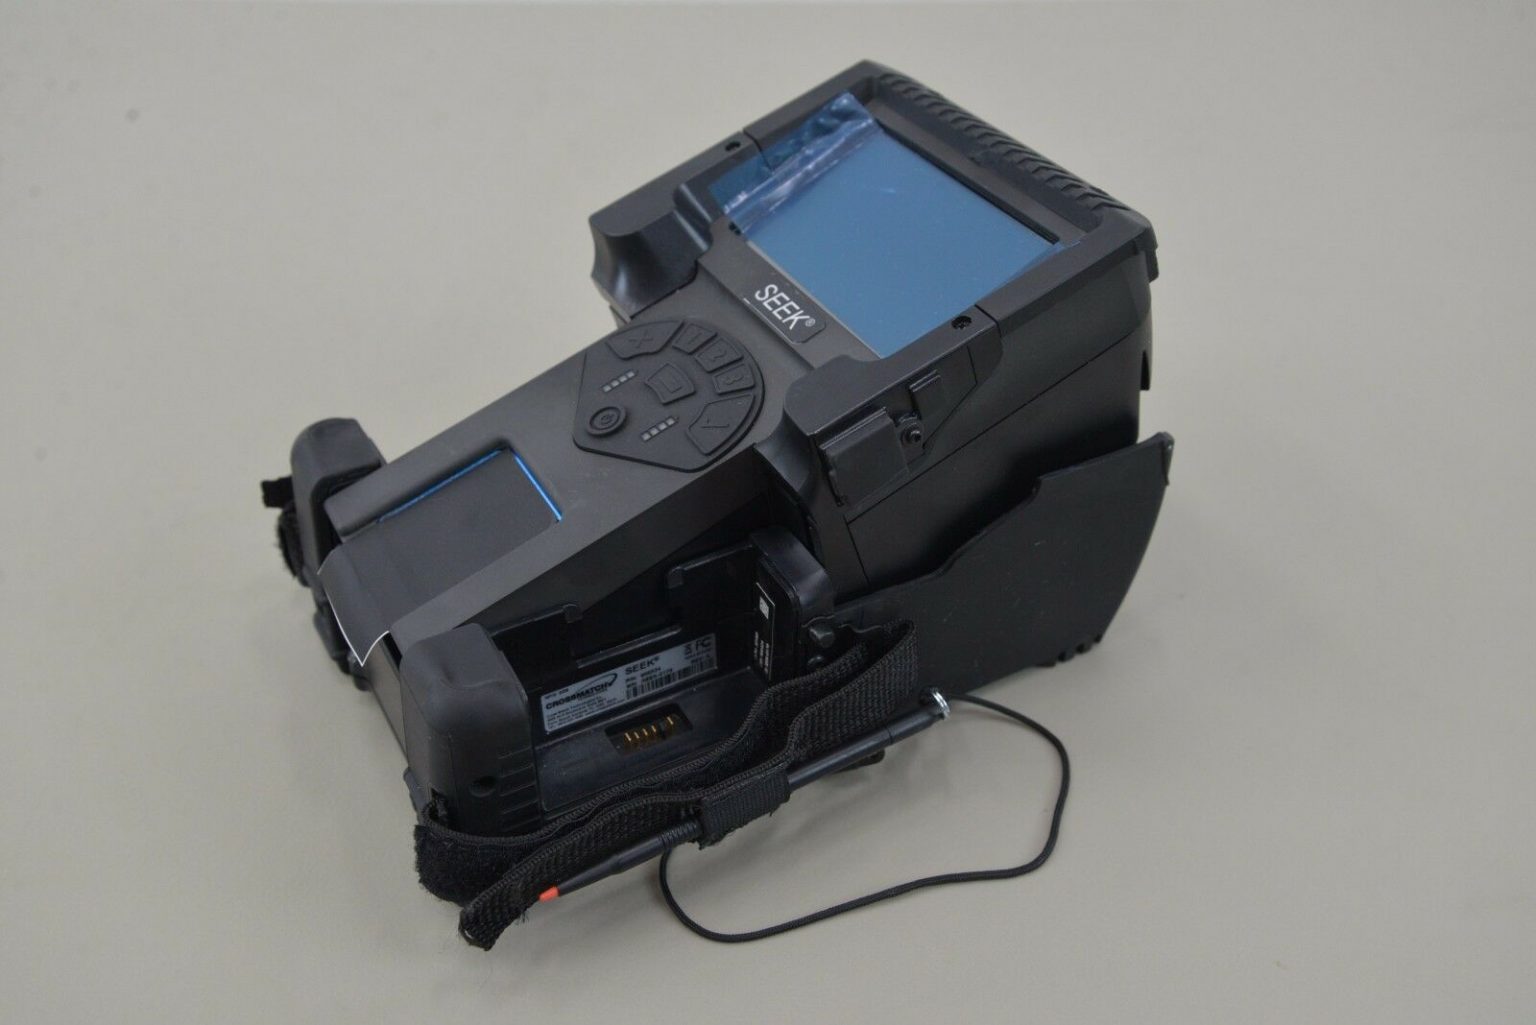 hiide portable biometric device